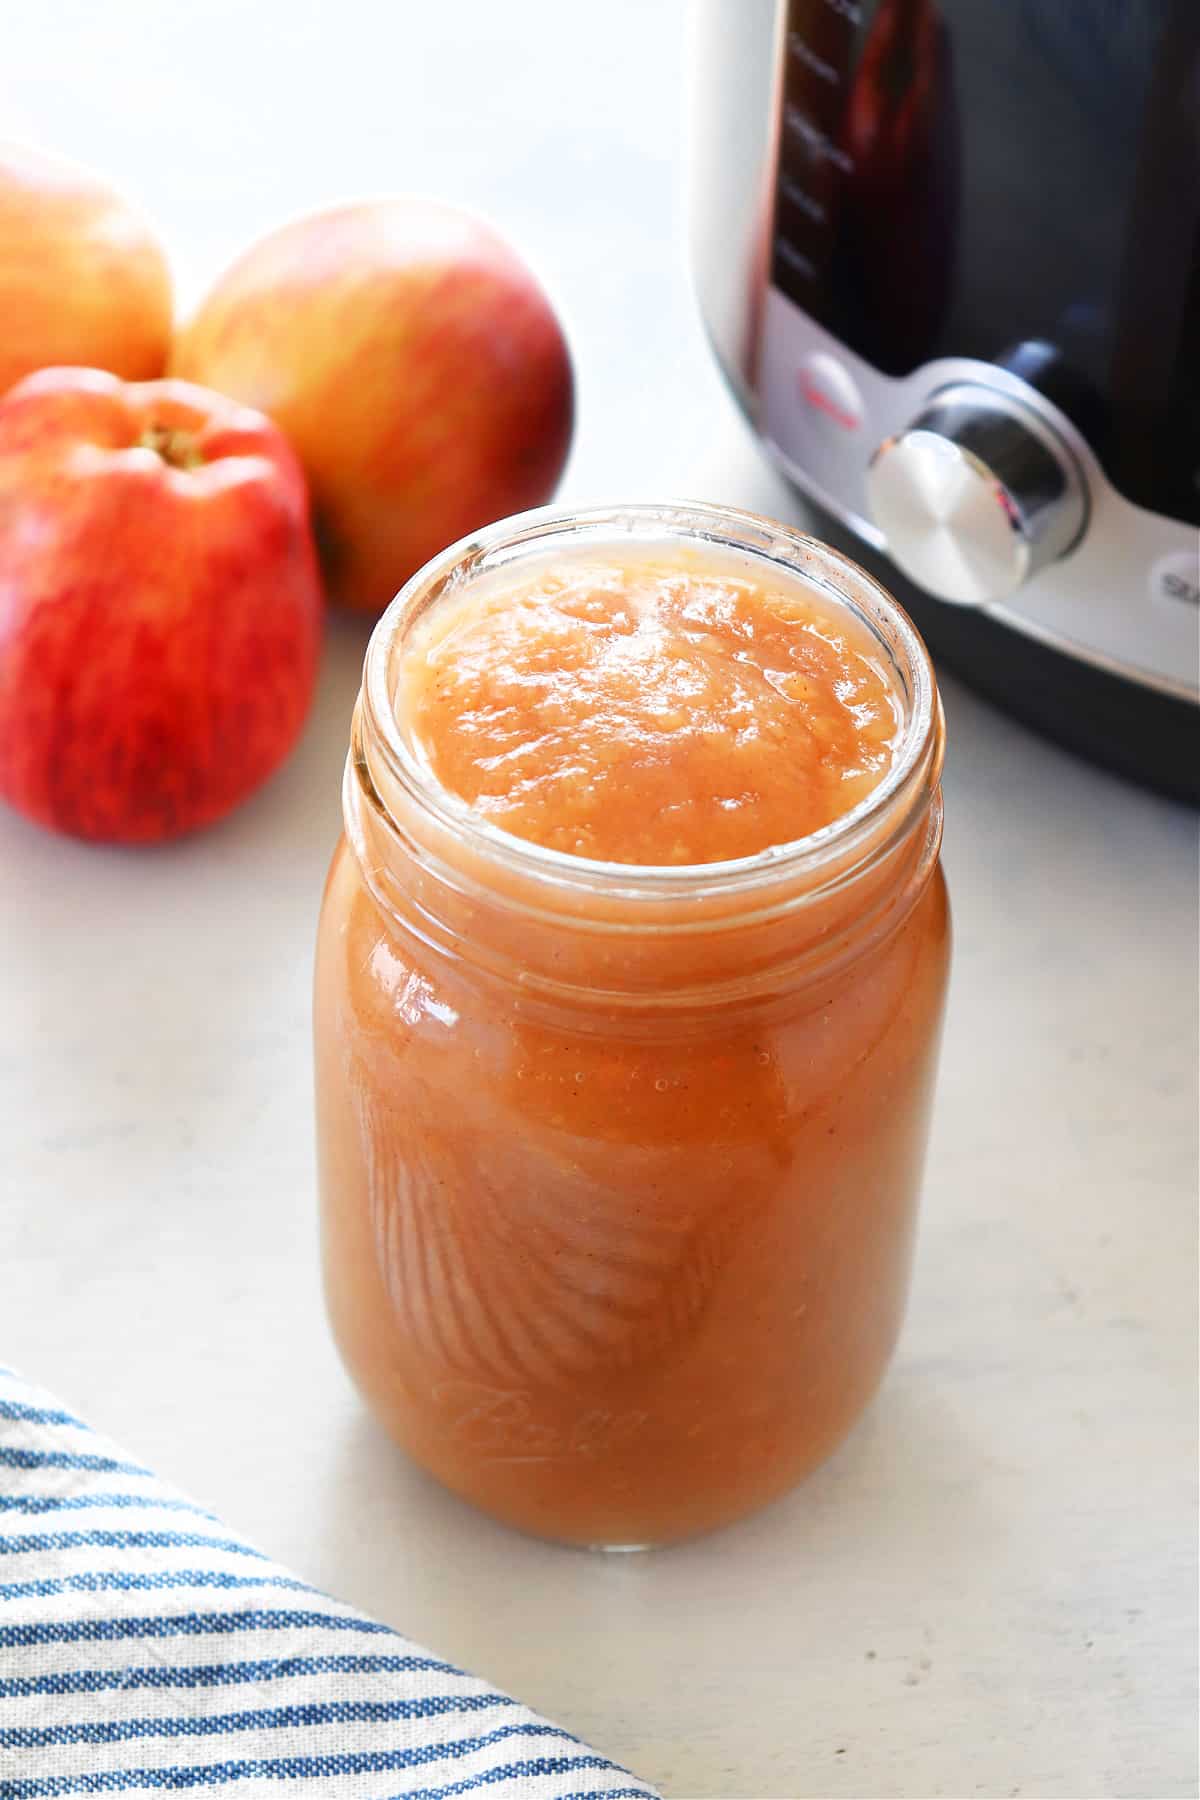 Applesauce in a jar.